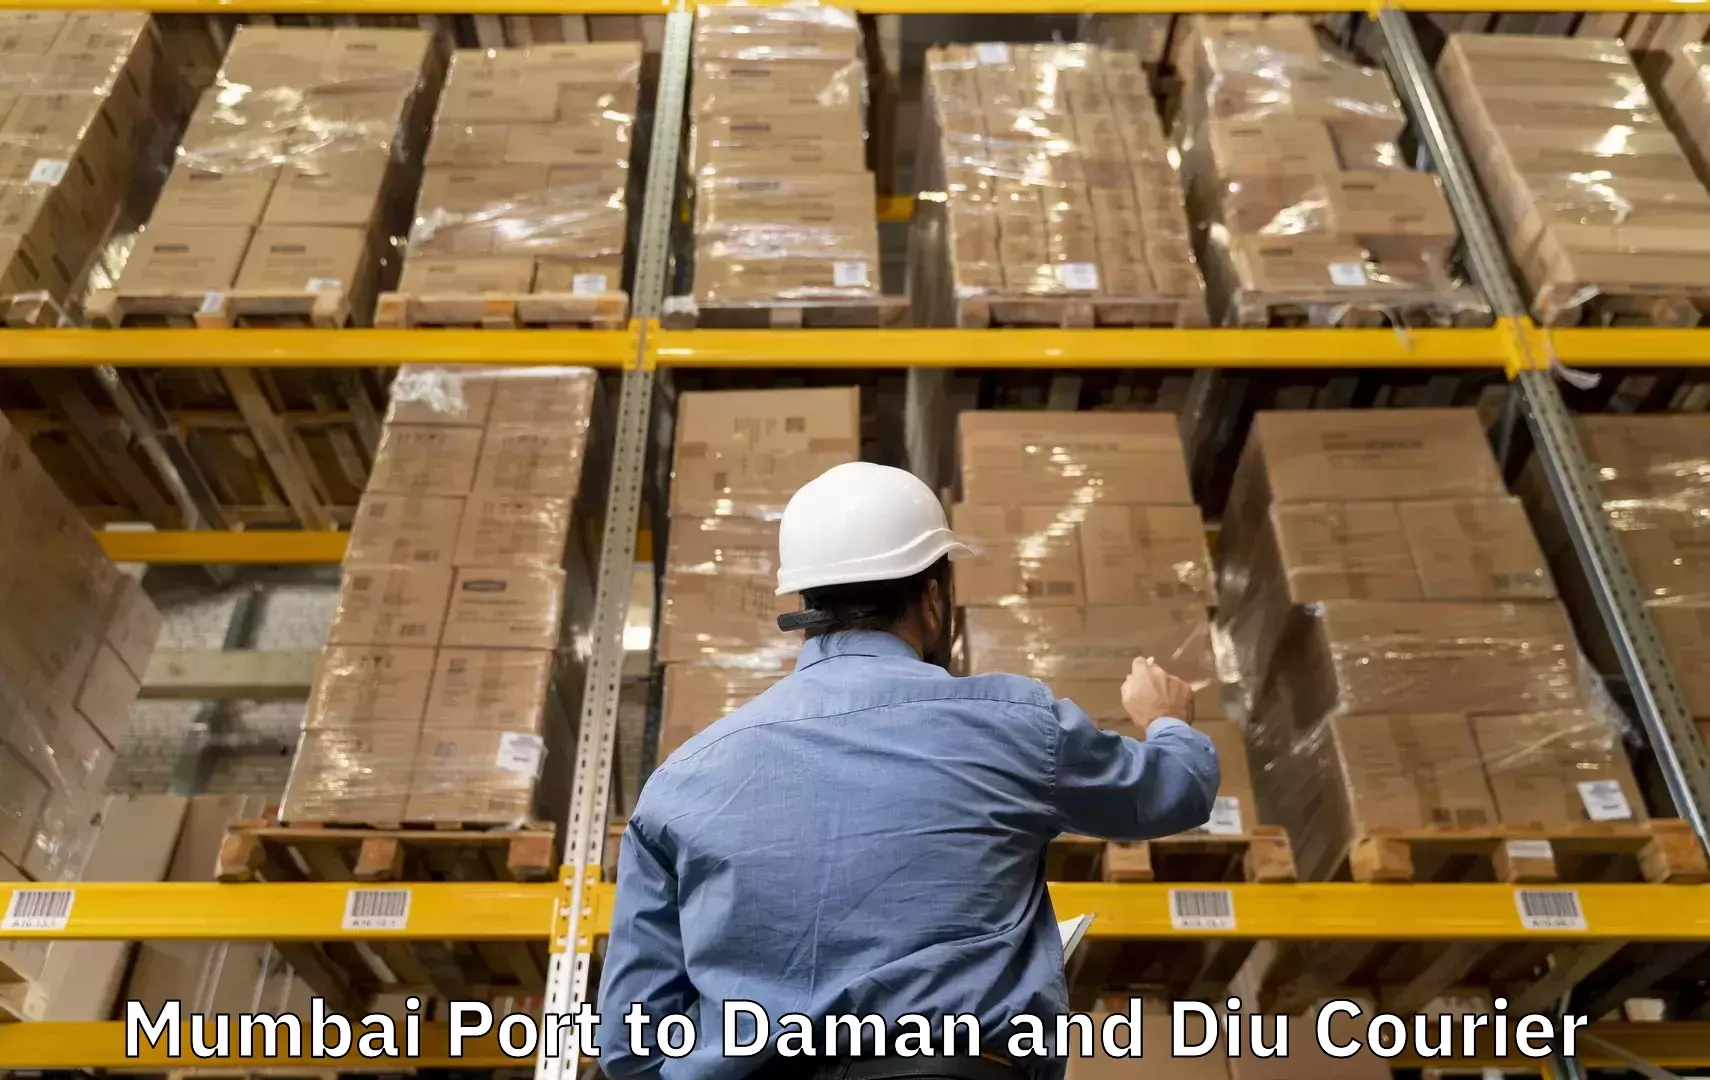 Baggage shipping experts Mumbai Port to Daman and Diu